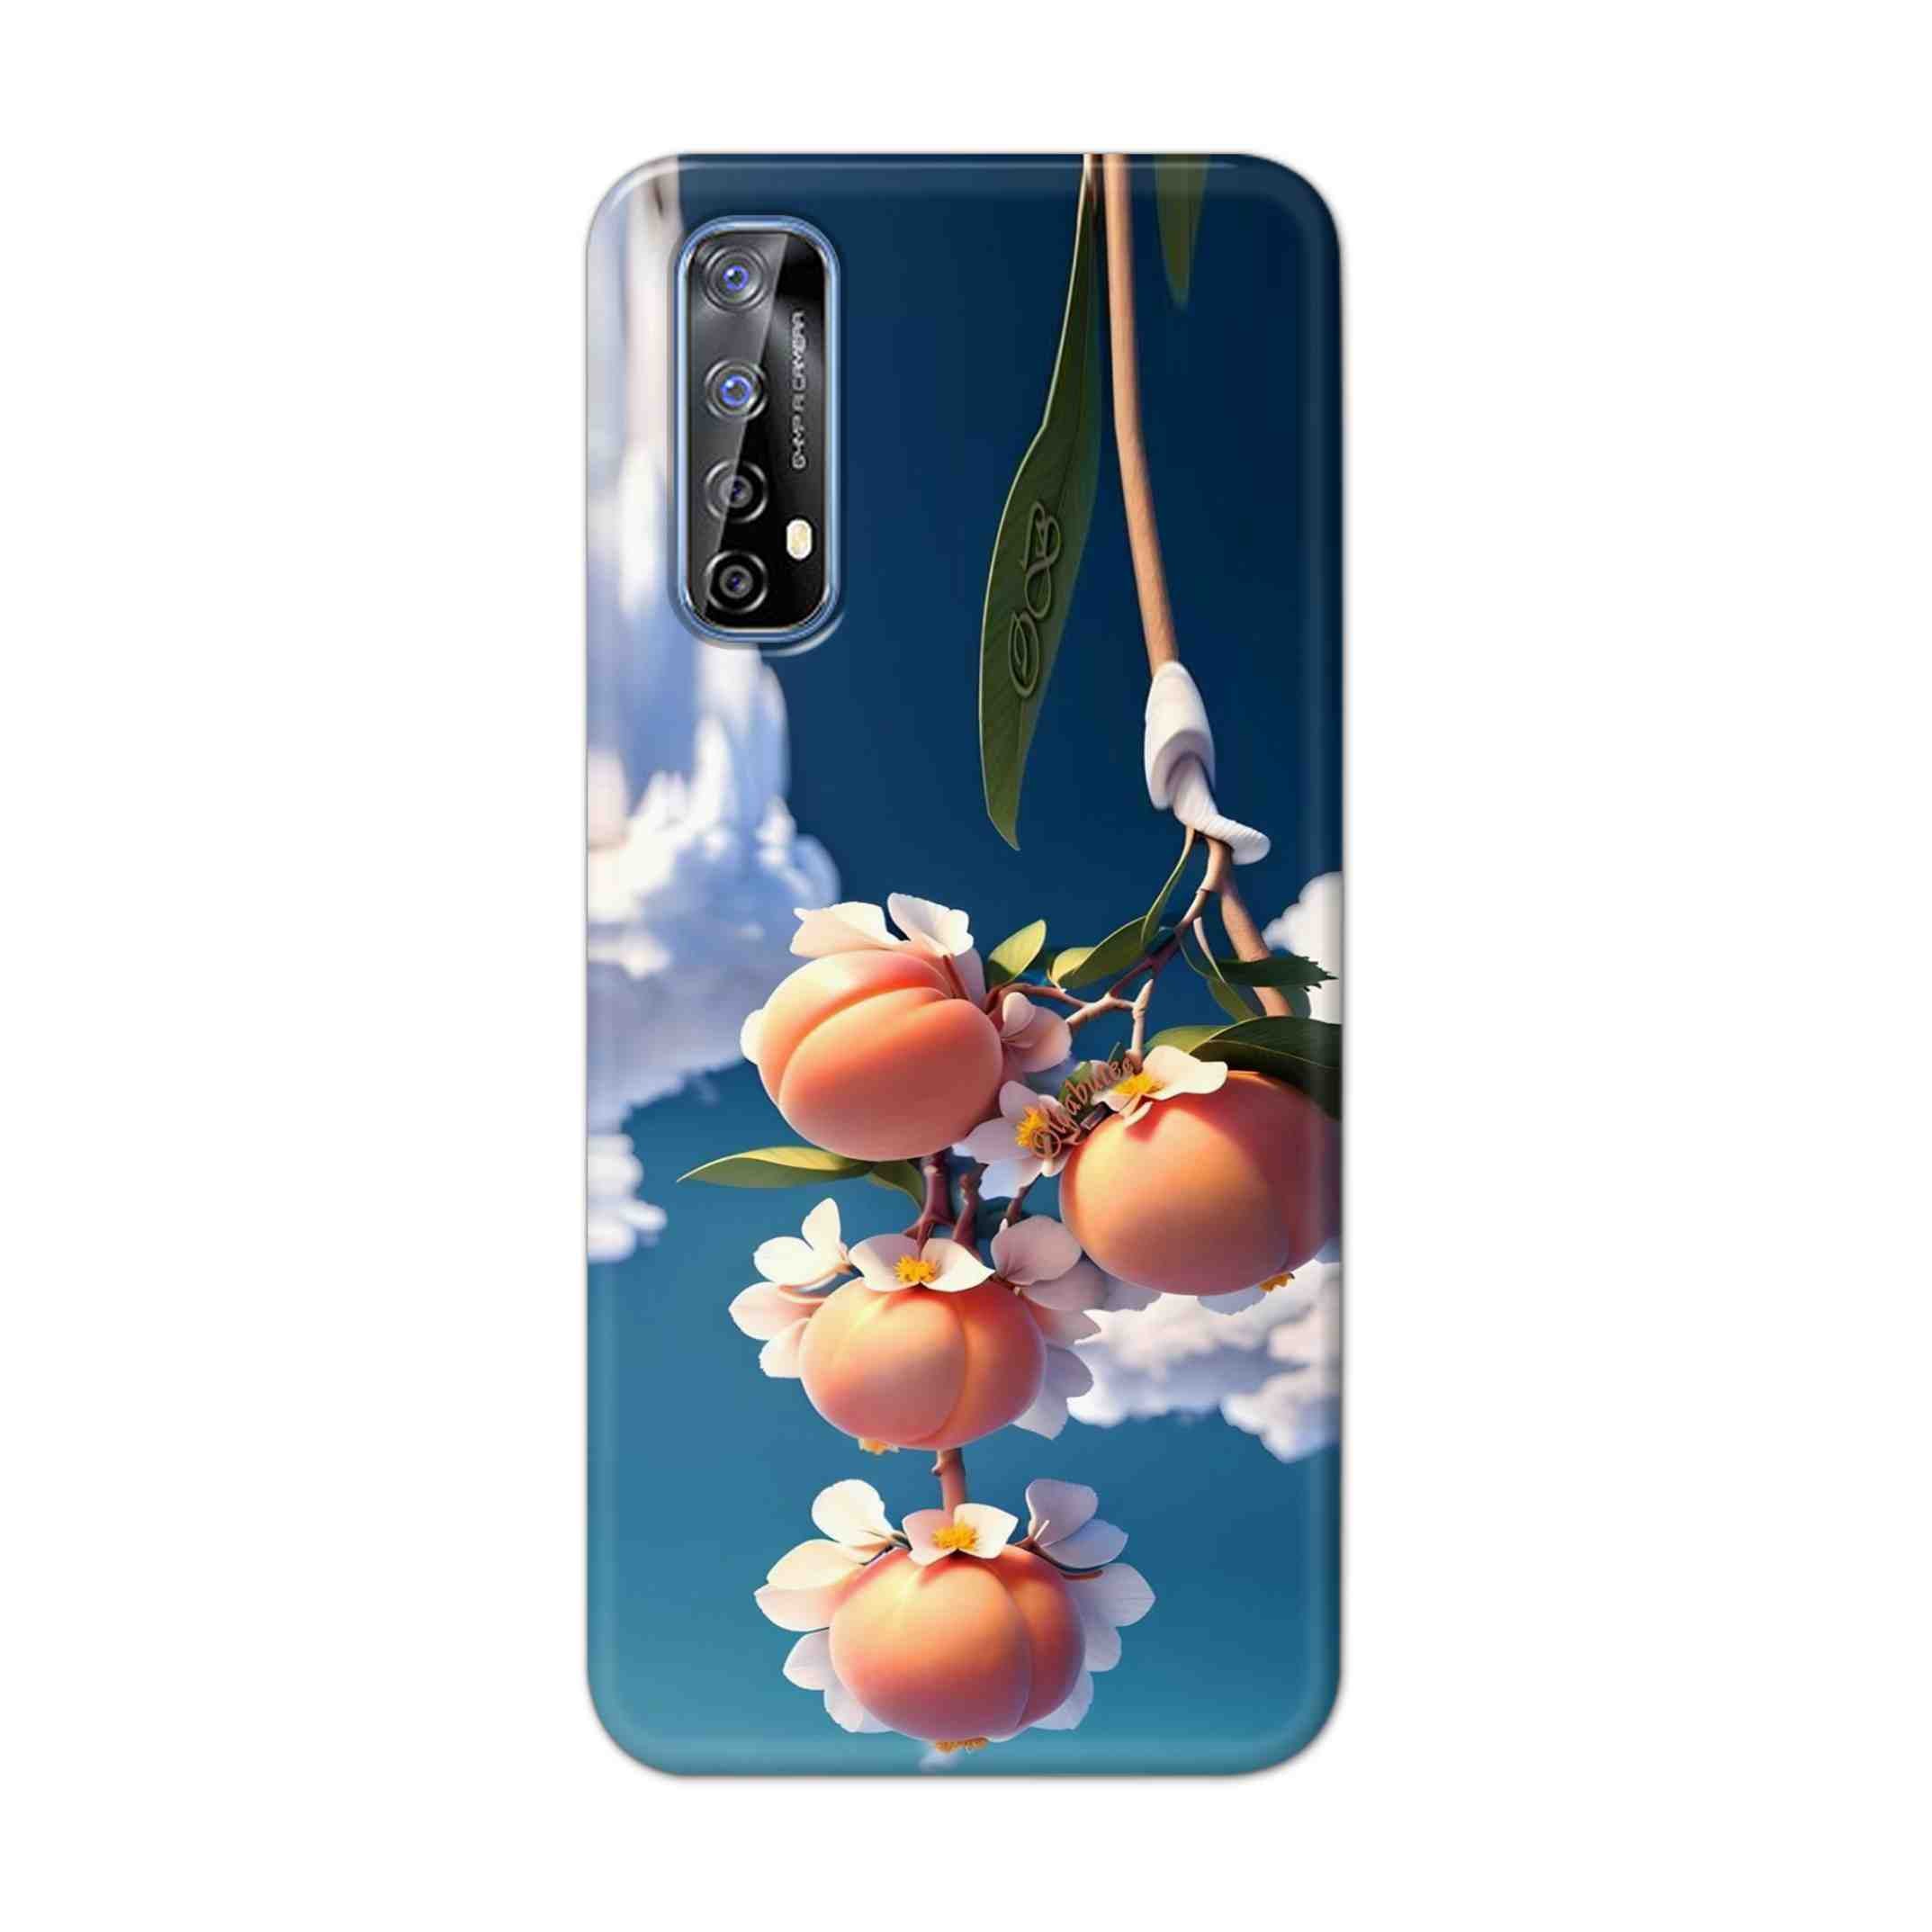 Buy Fruit Hard Back Mobile Phone Case Cover For Realme 7 Online